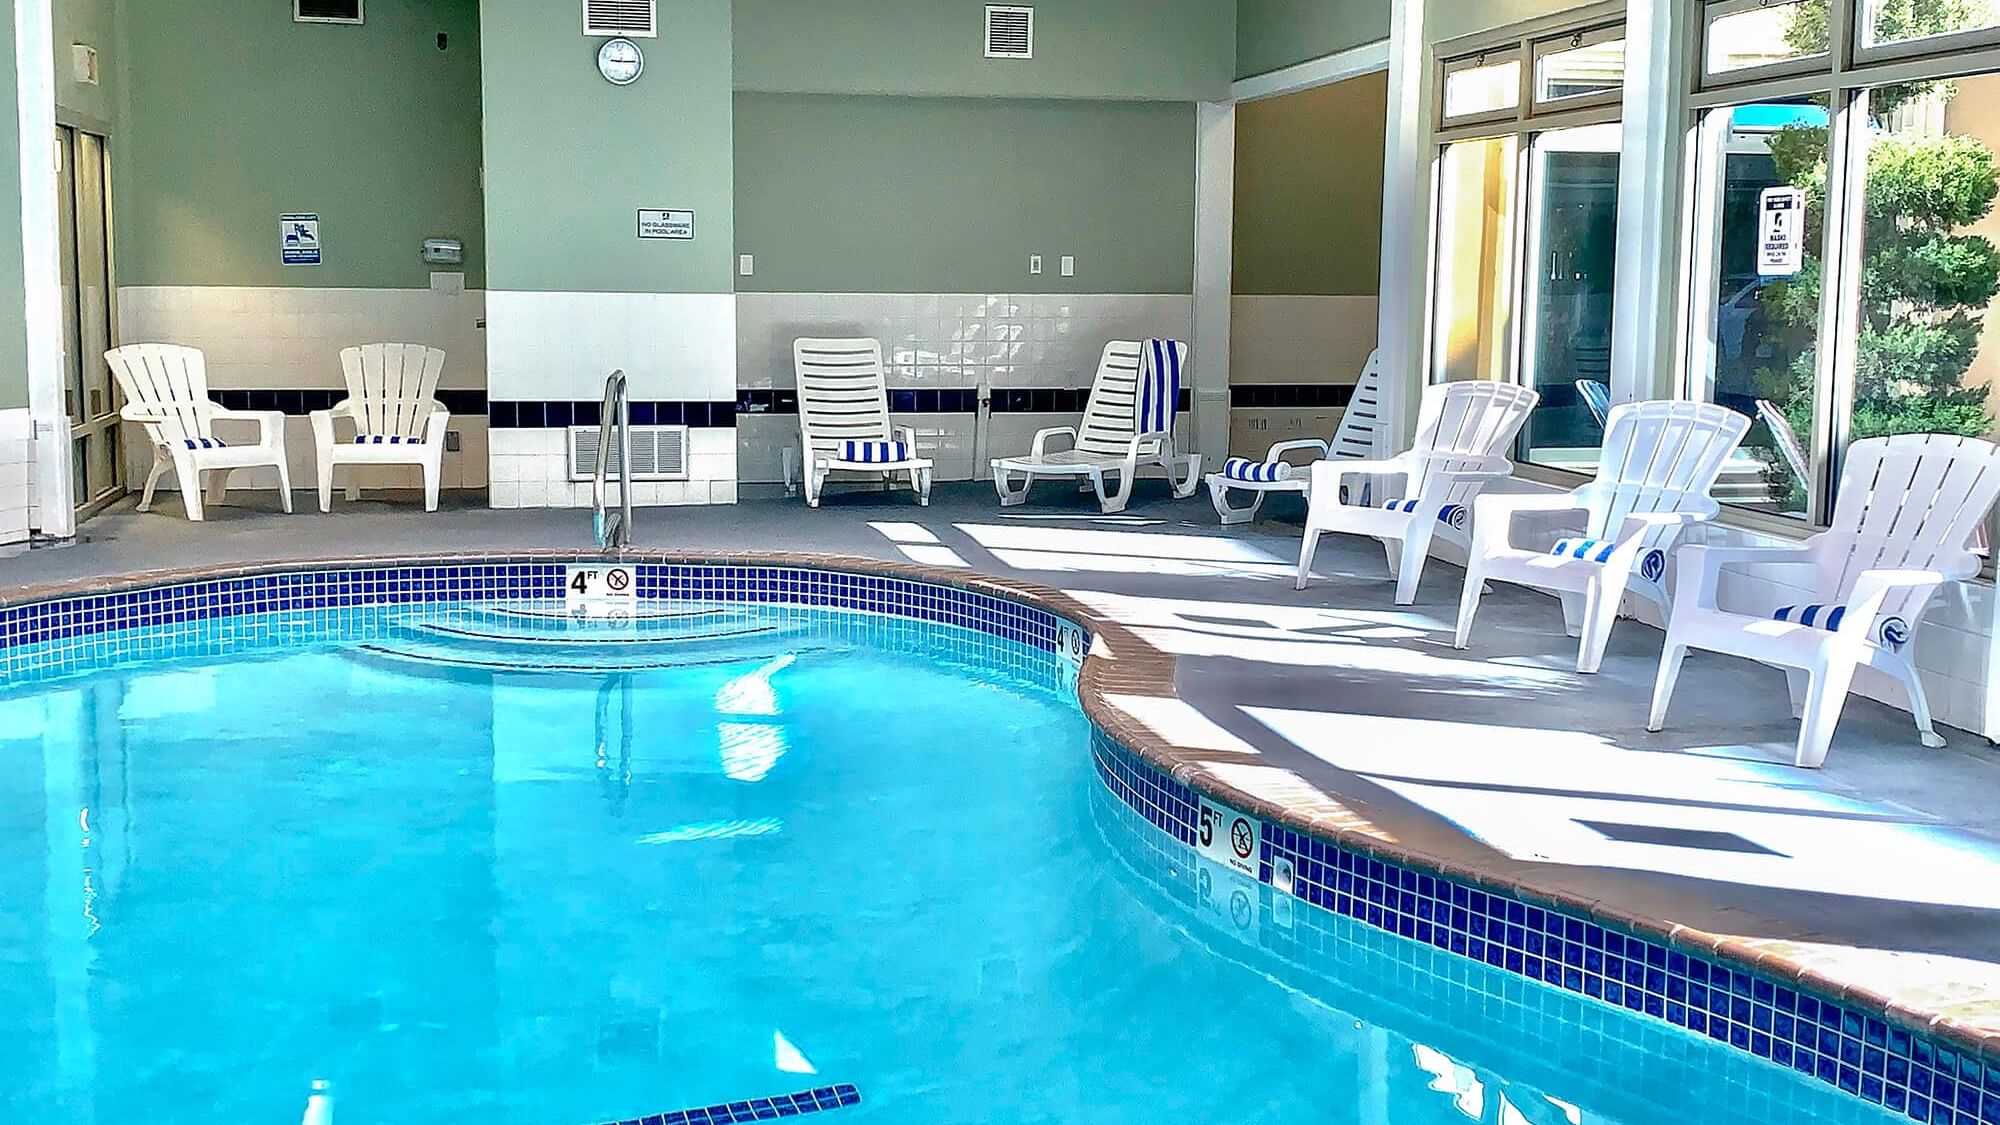  Indoor heated pool at Legacy Vacation Resorts 